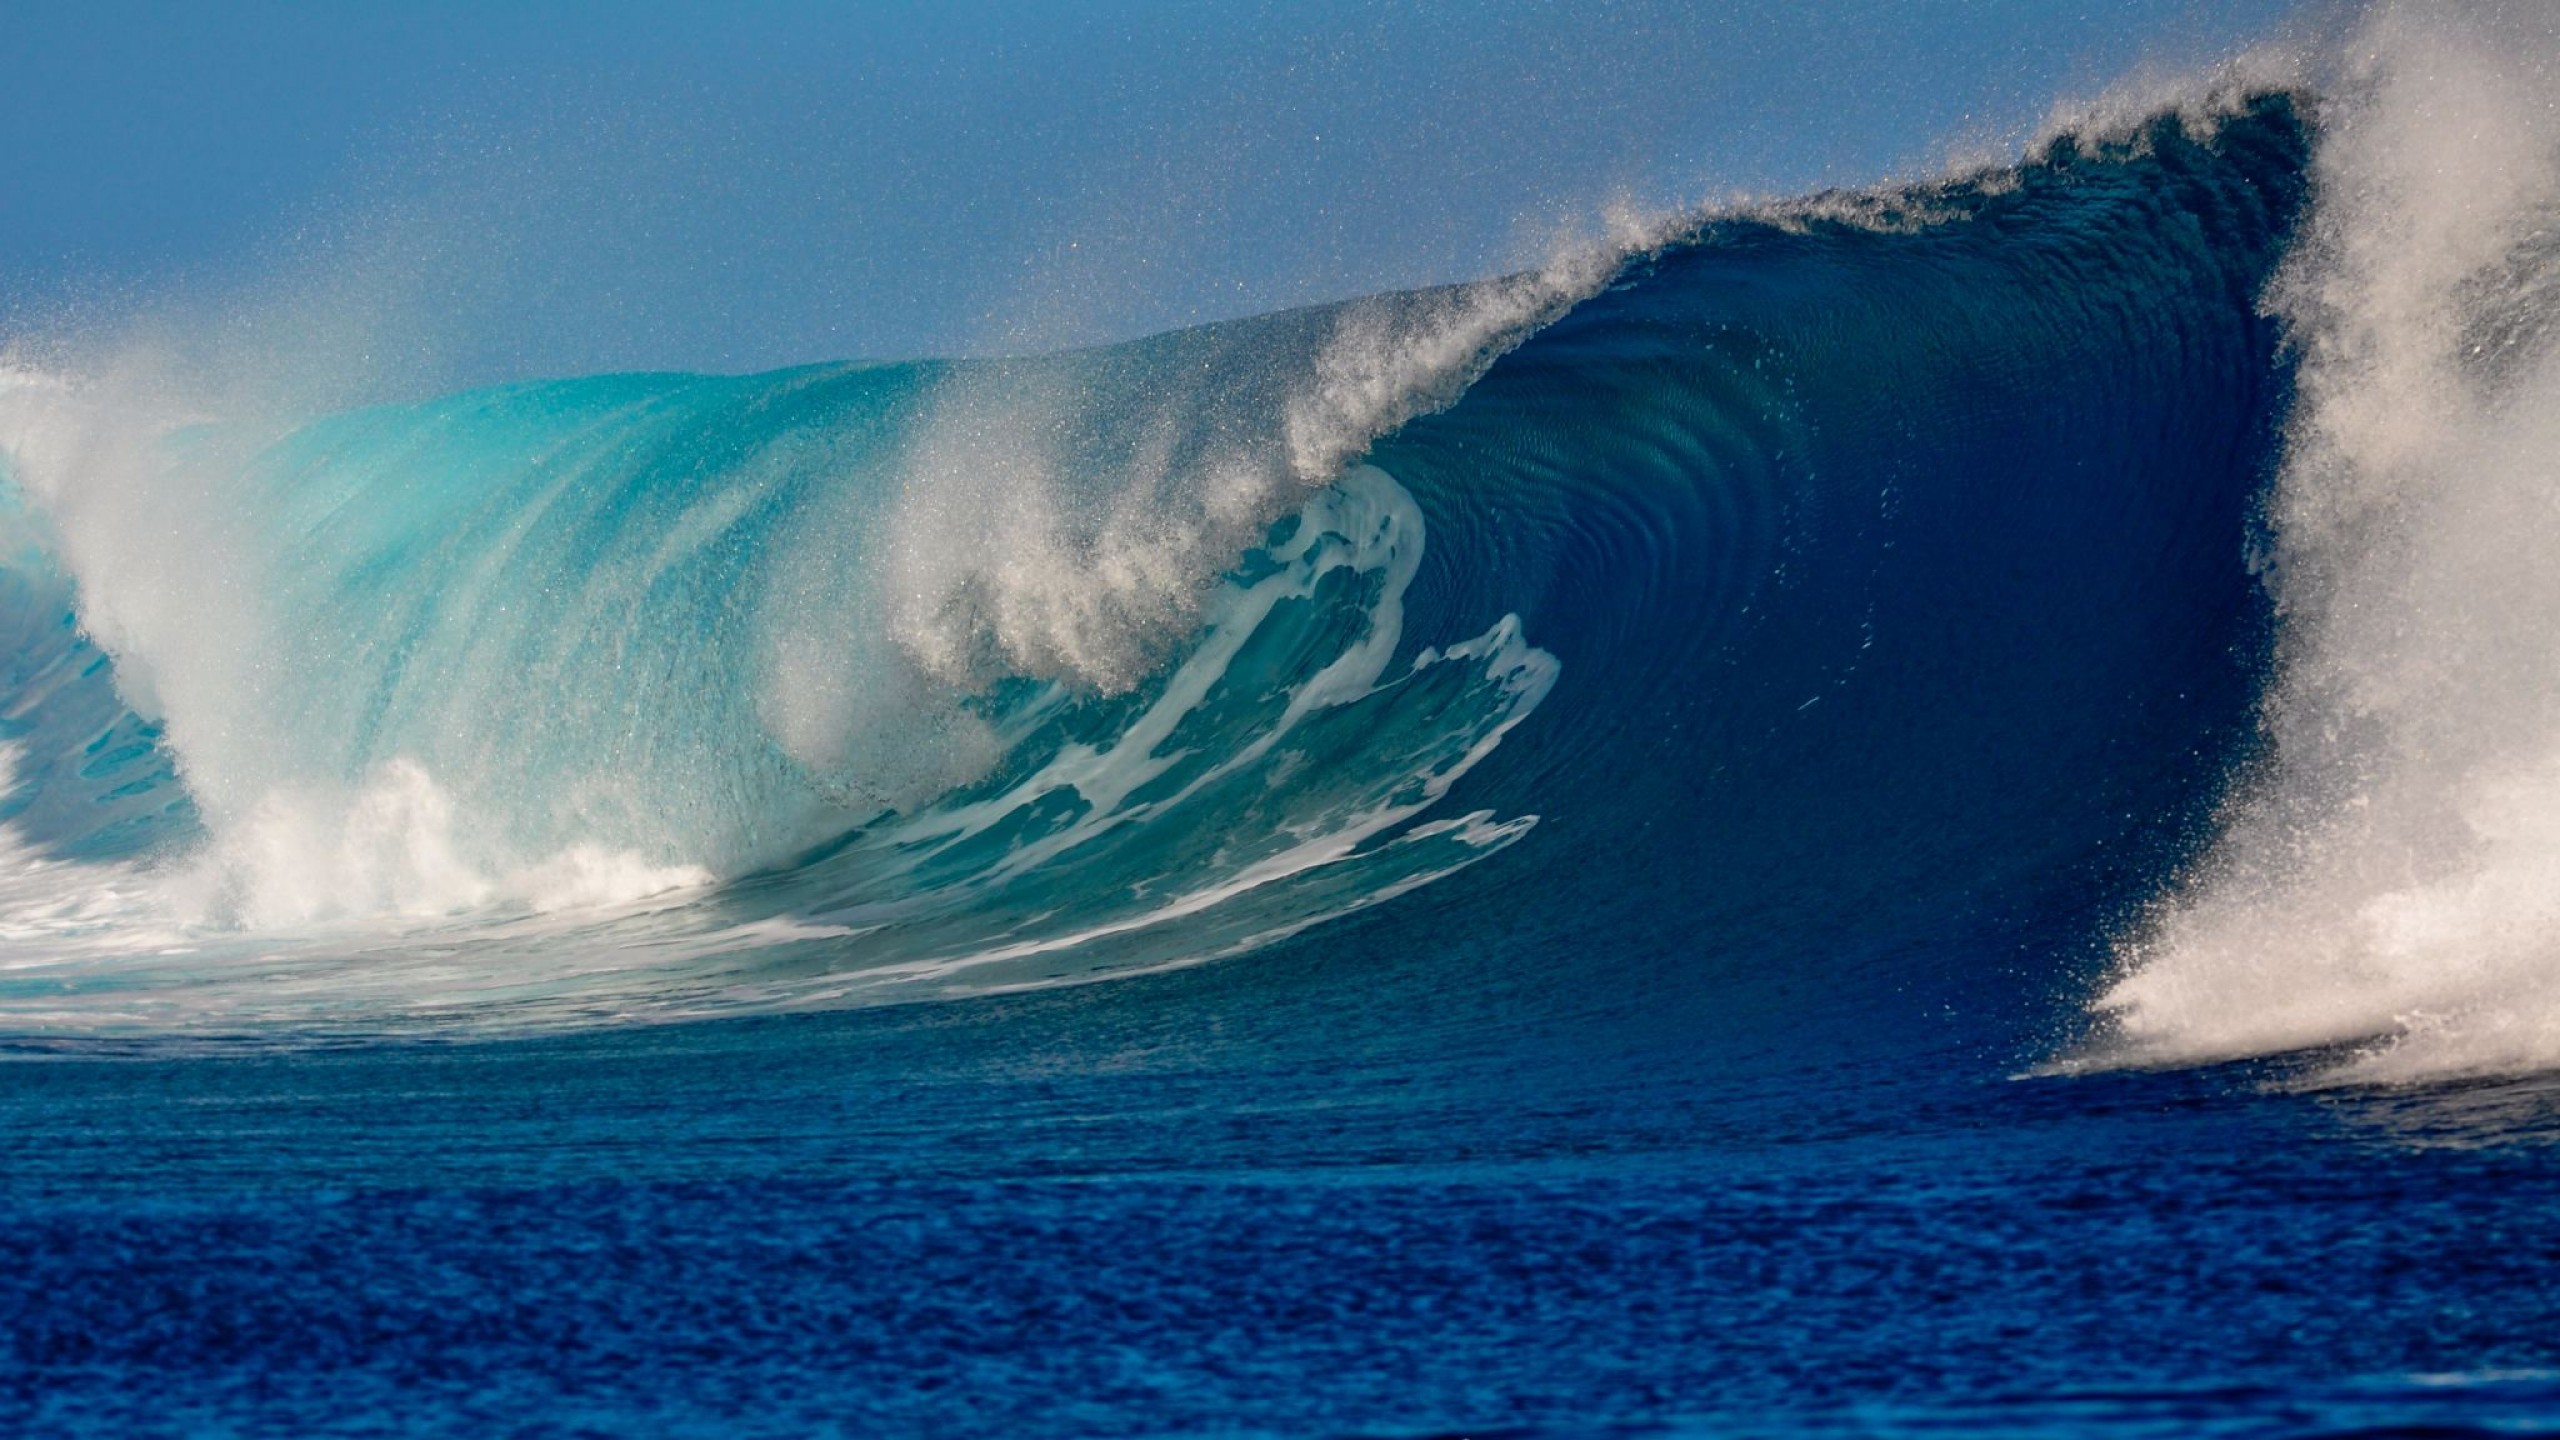 Beautiful Ocean Waves Live Wallpaper for Desktop and Mobiles